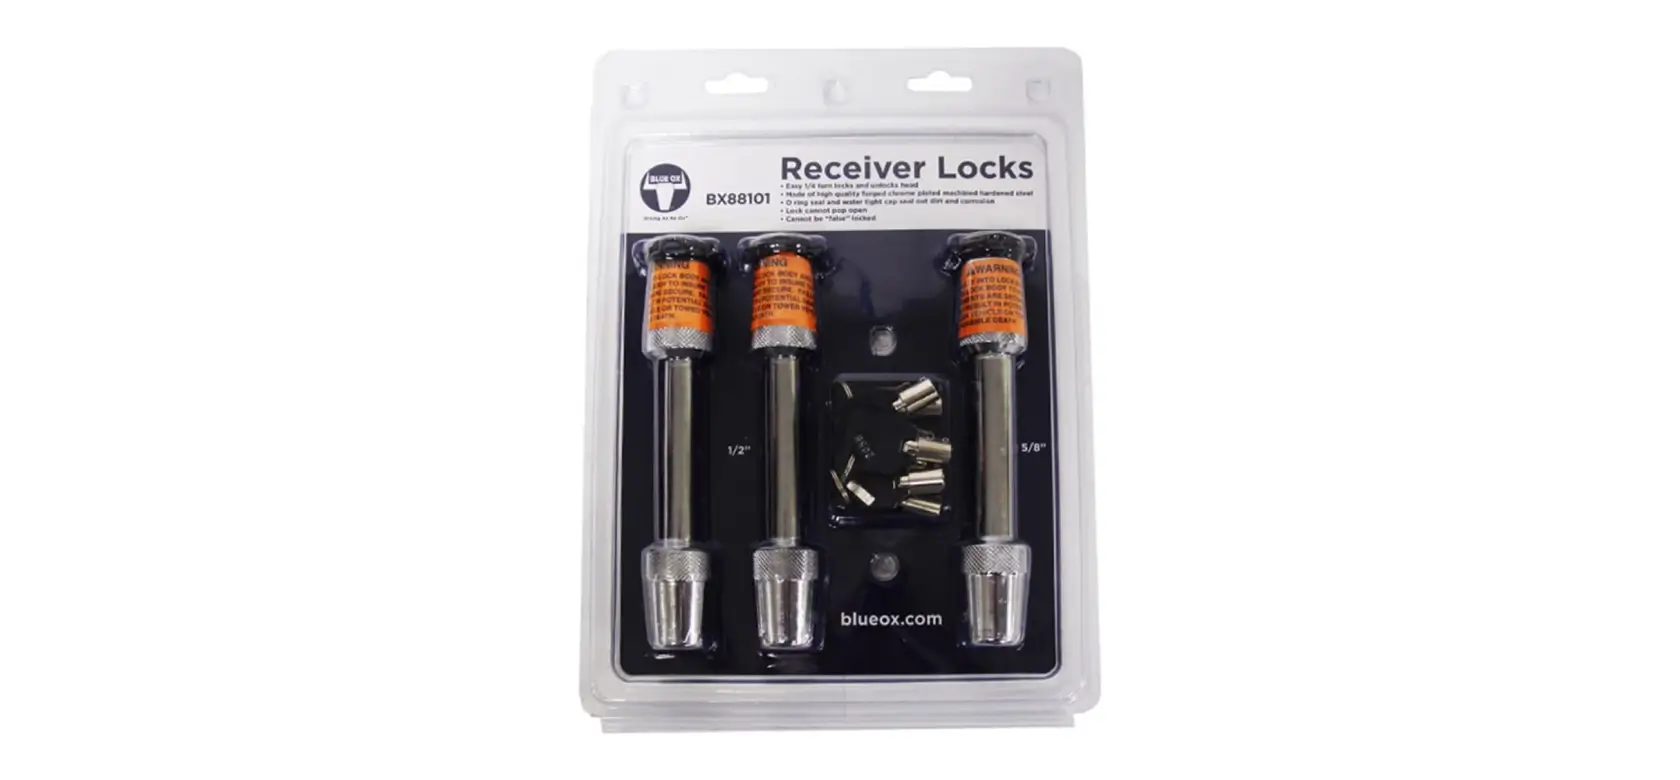 Rv Blue Ox Bx88101 Two 1 2 Locks One 5 8 Lock Kit